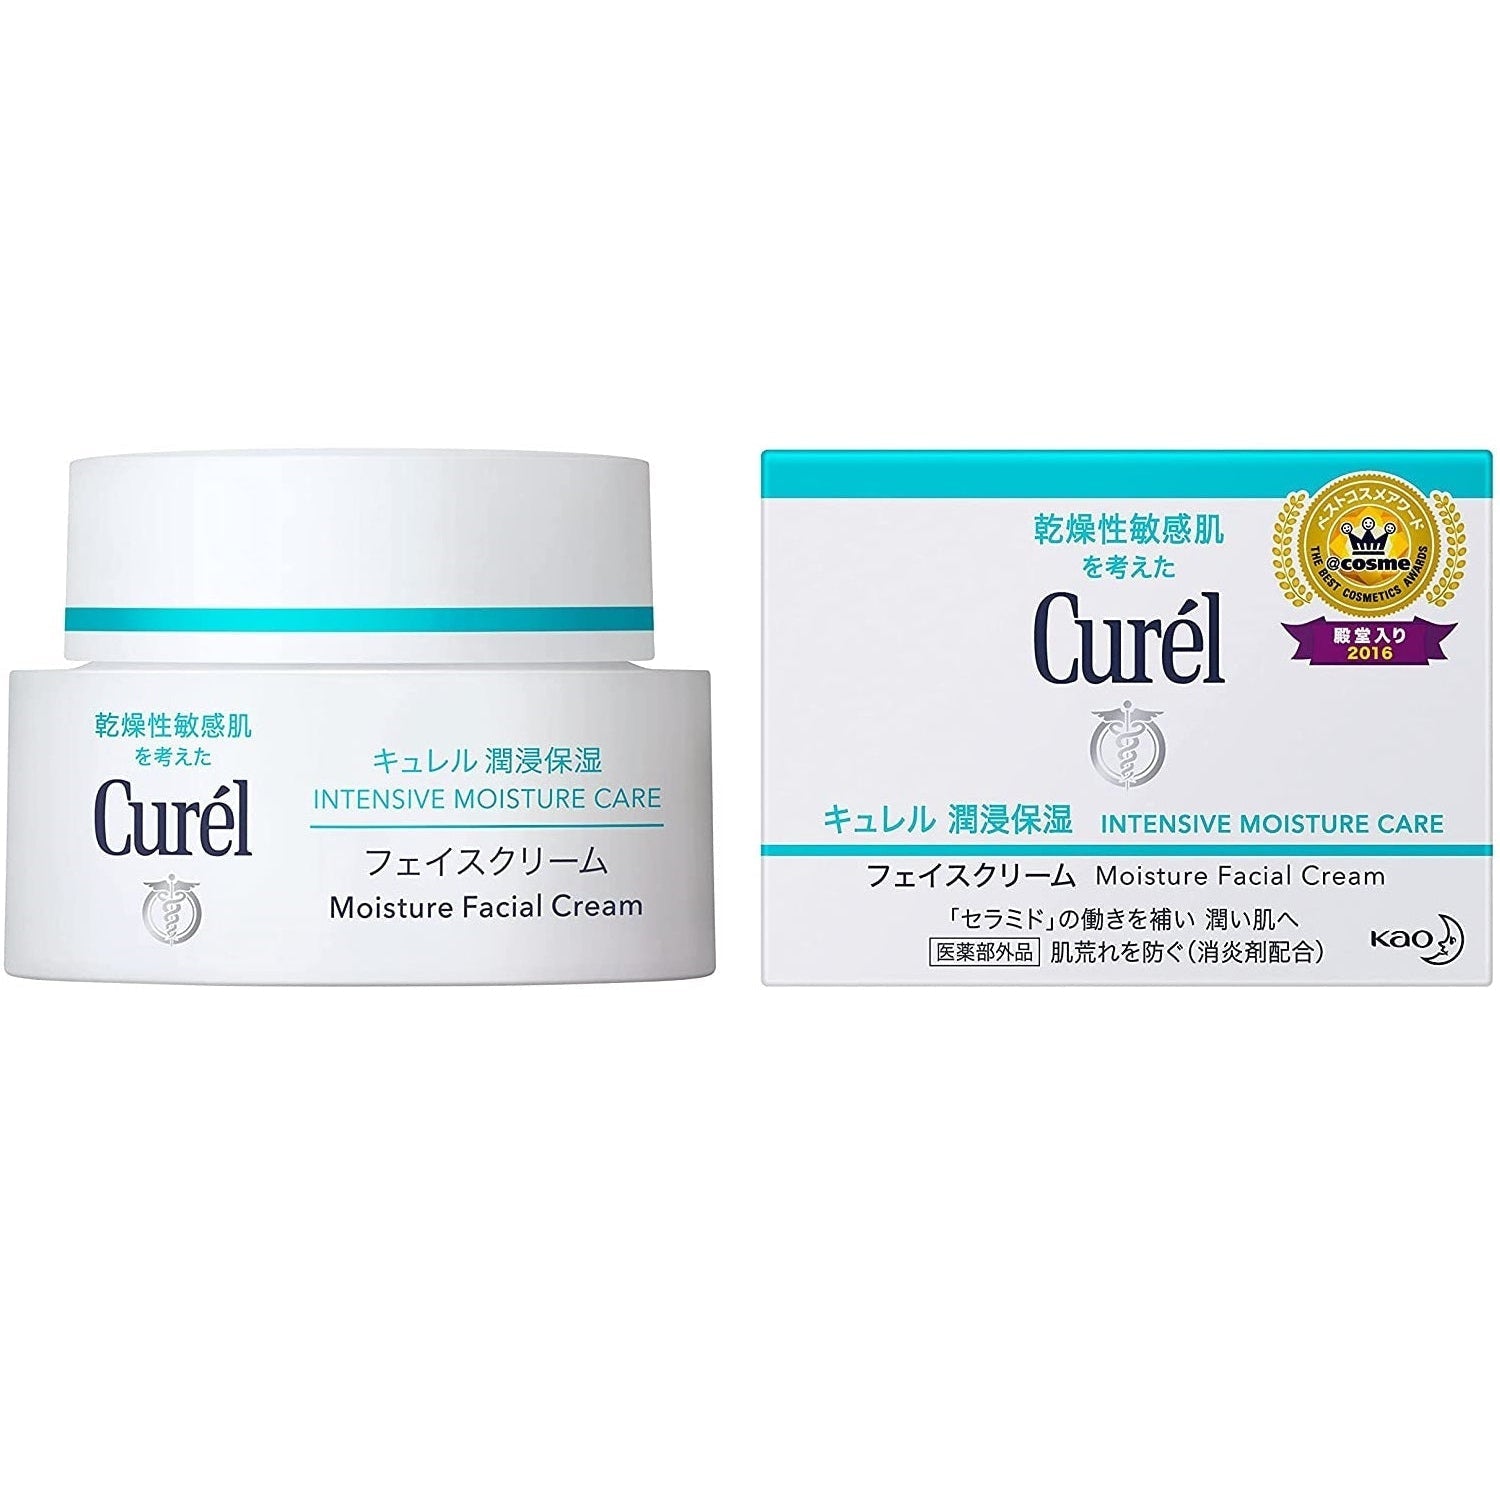 Kao Curel Intensive Moisture Face Cream for Sensitive Skin 40g, Japanese Taste